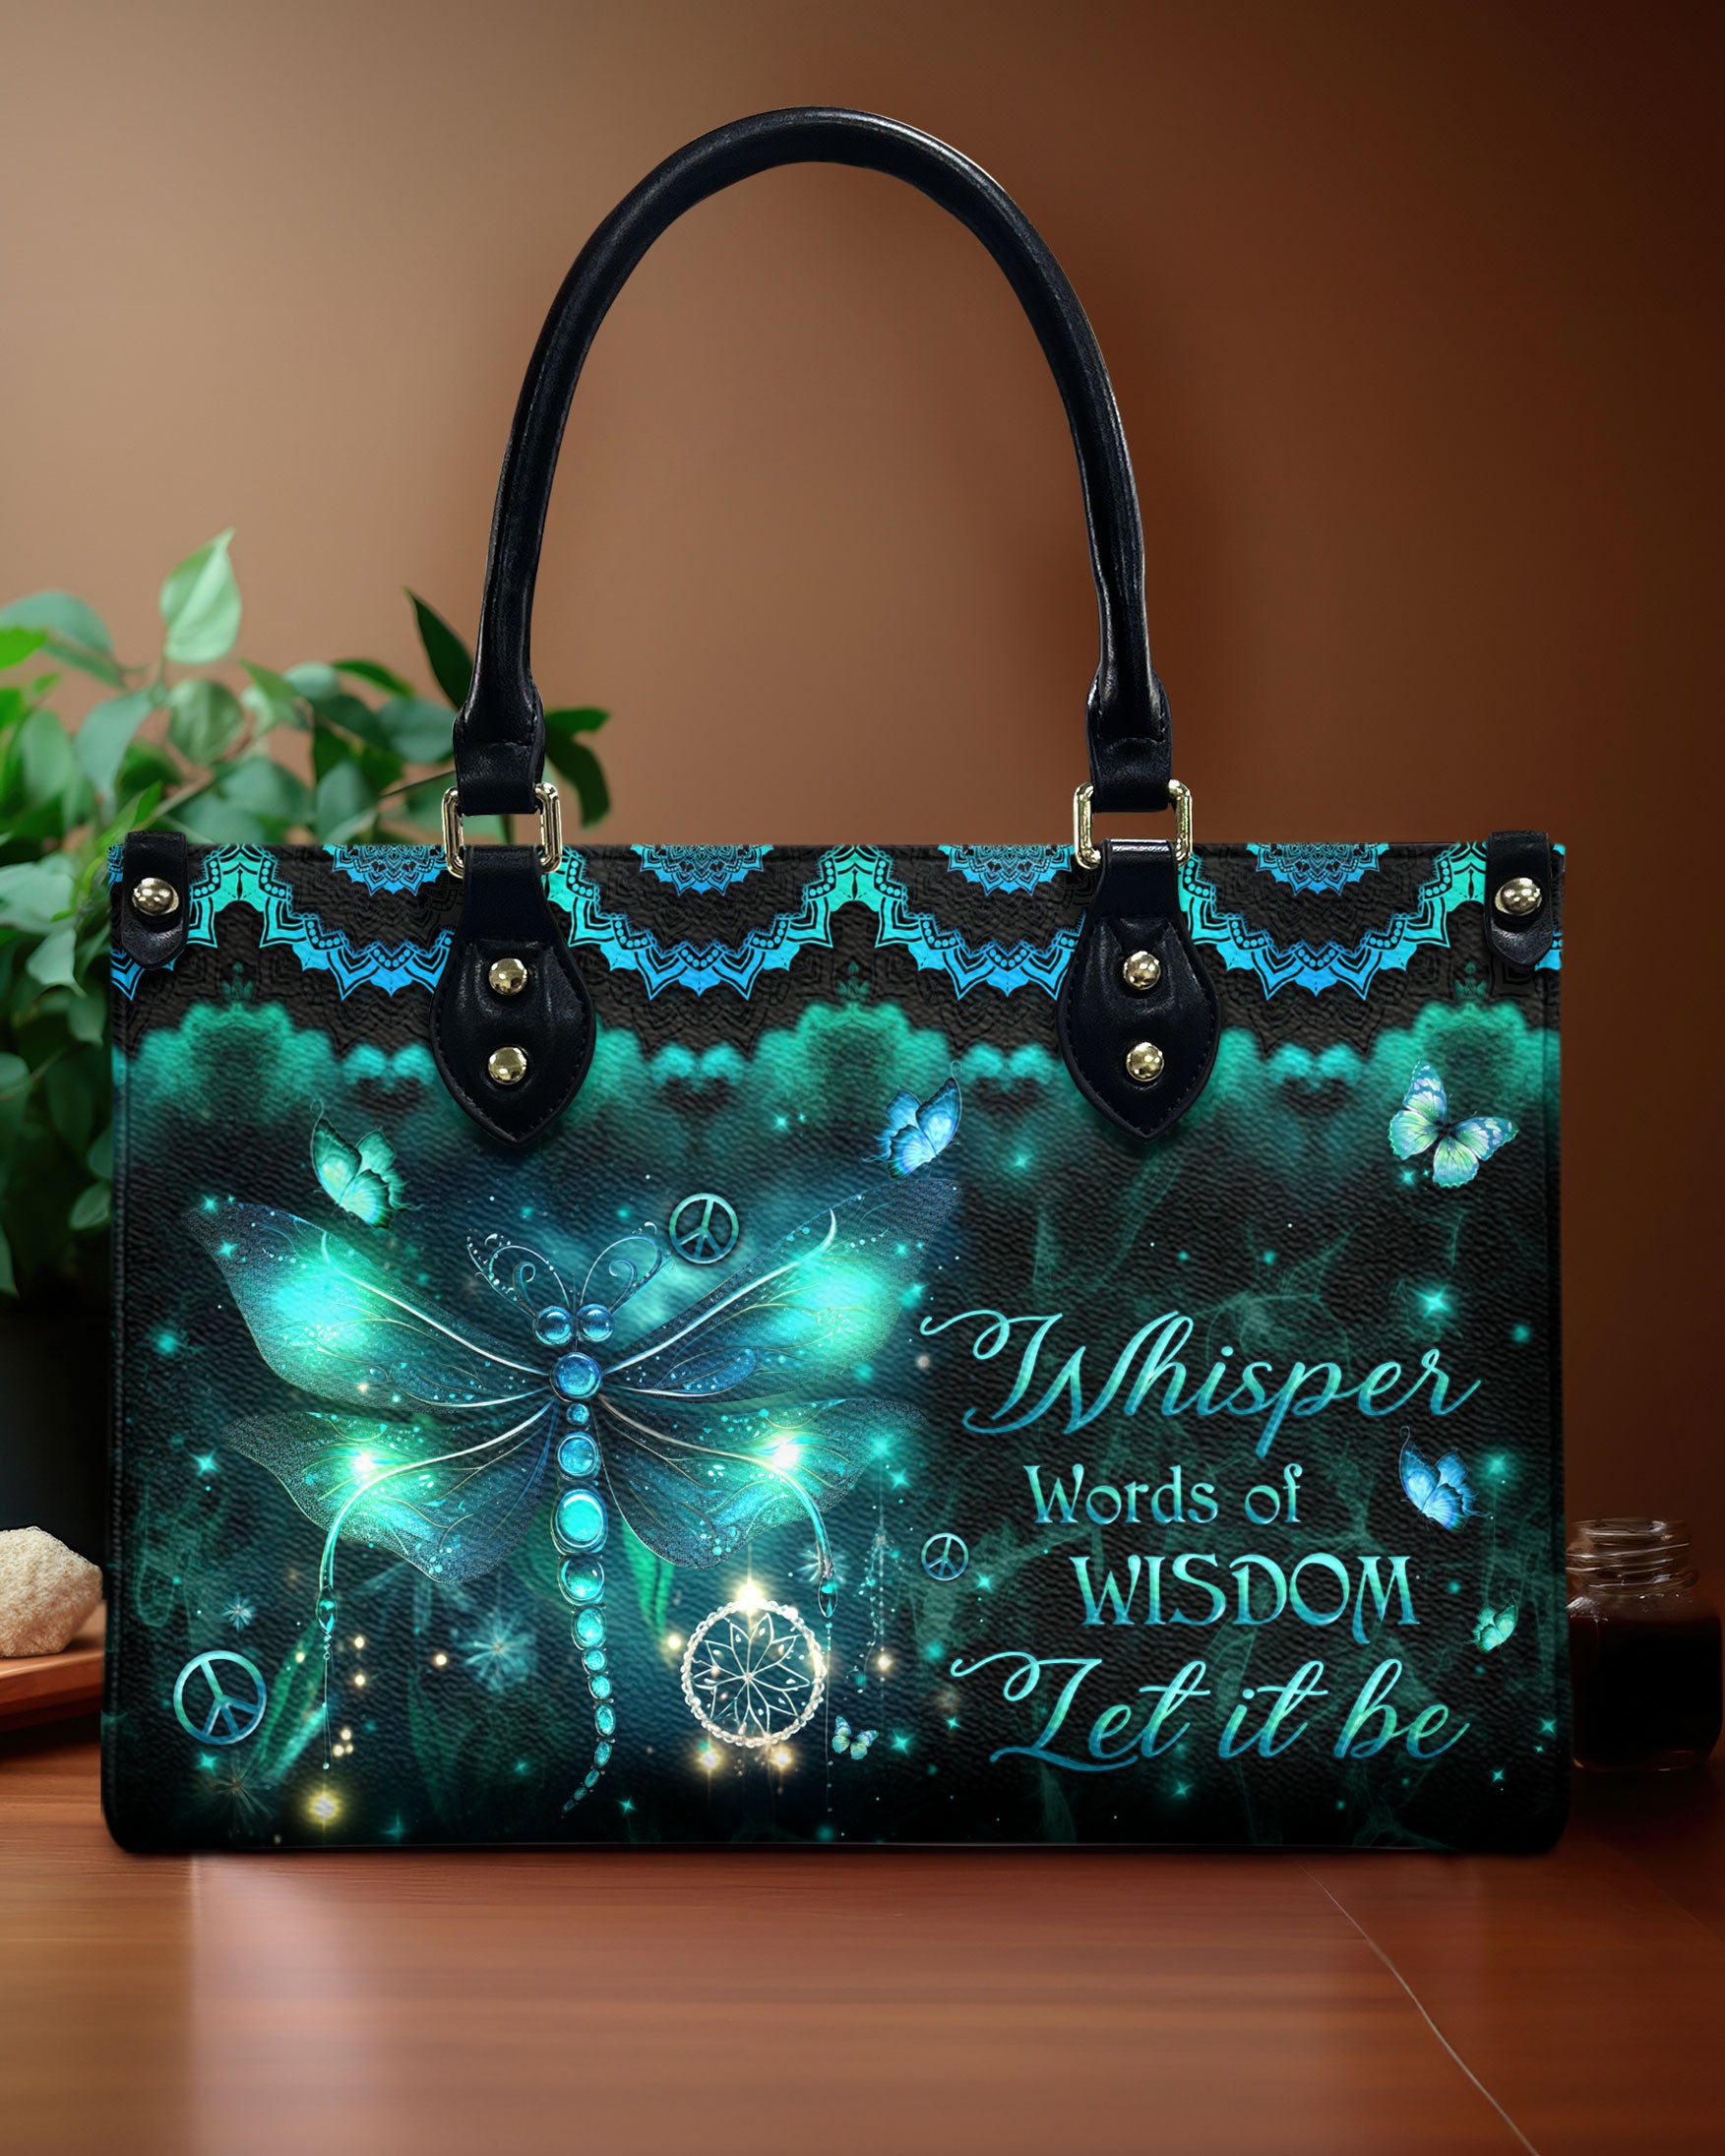 WHISPER WORDS OF WISDOM LEATHER HANDBAG - YHLN2603244